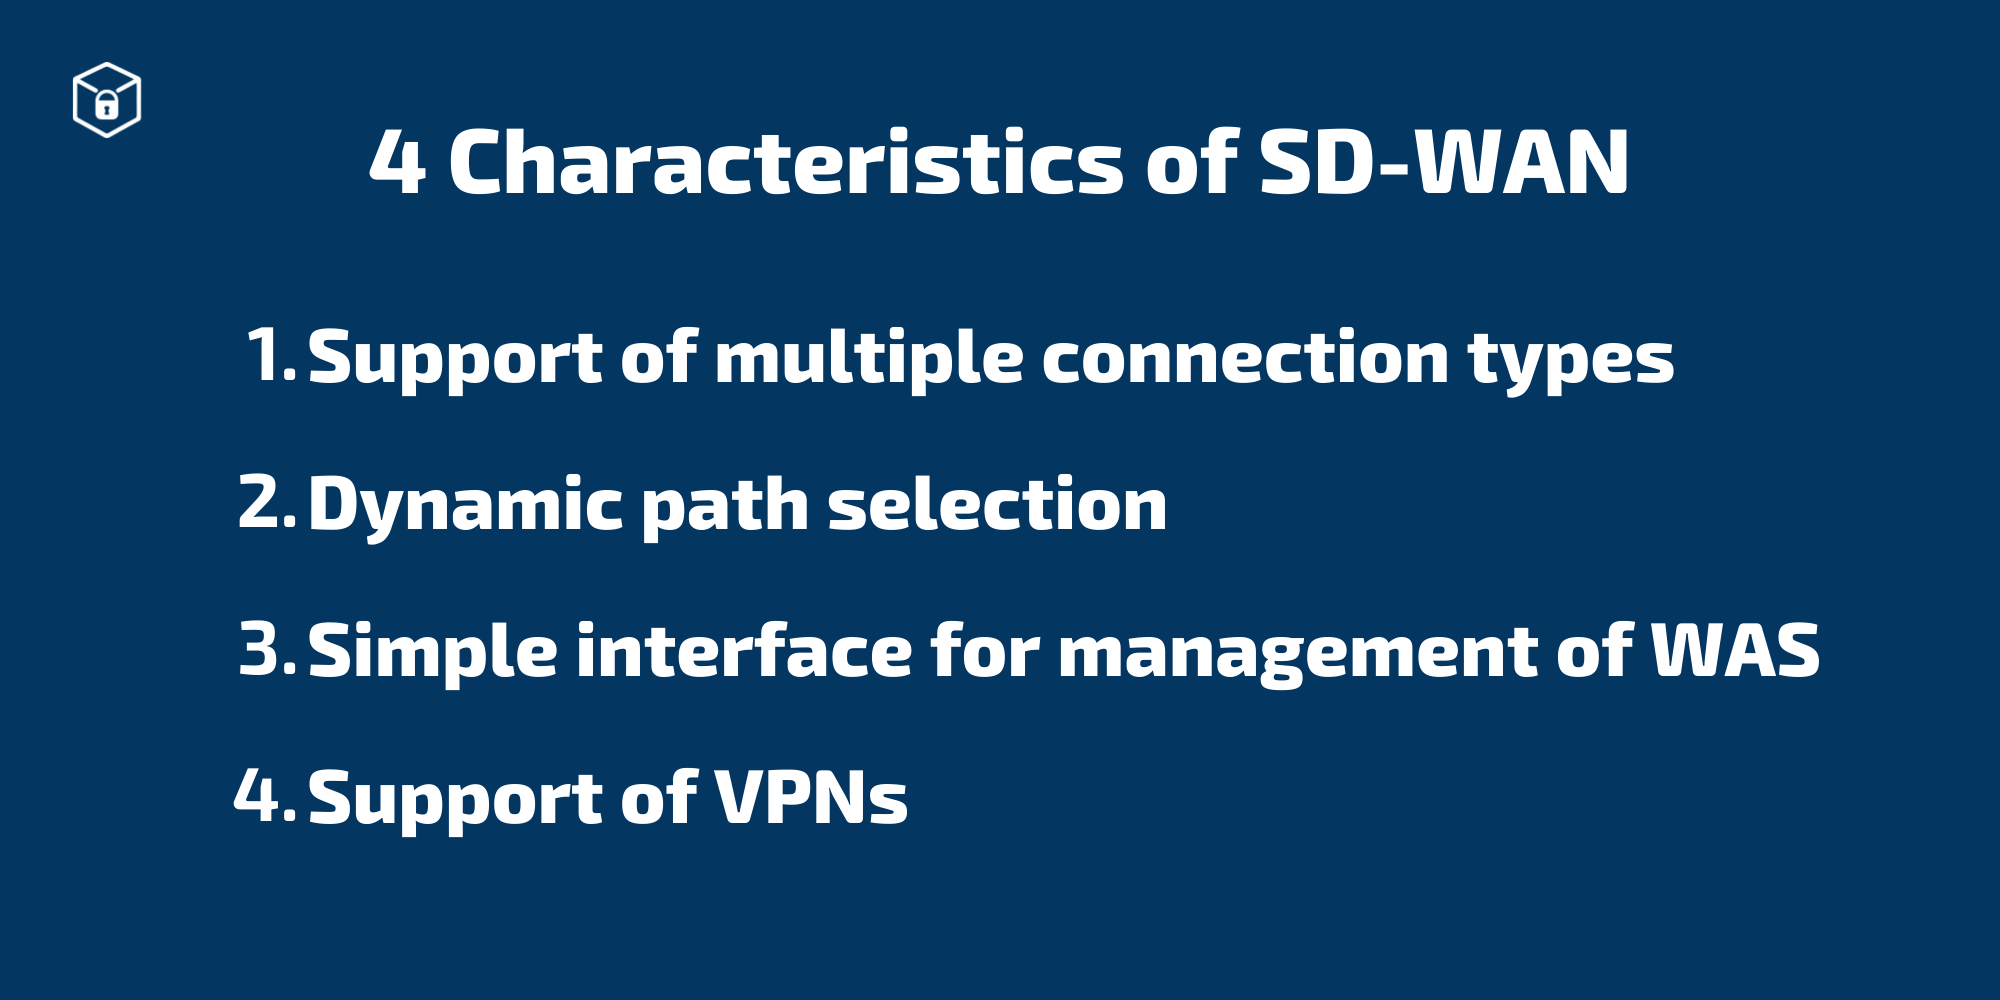 4 Characteristics of SD-WAN